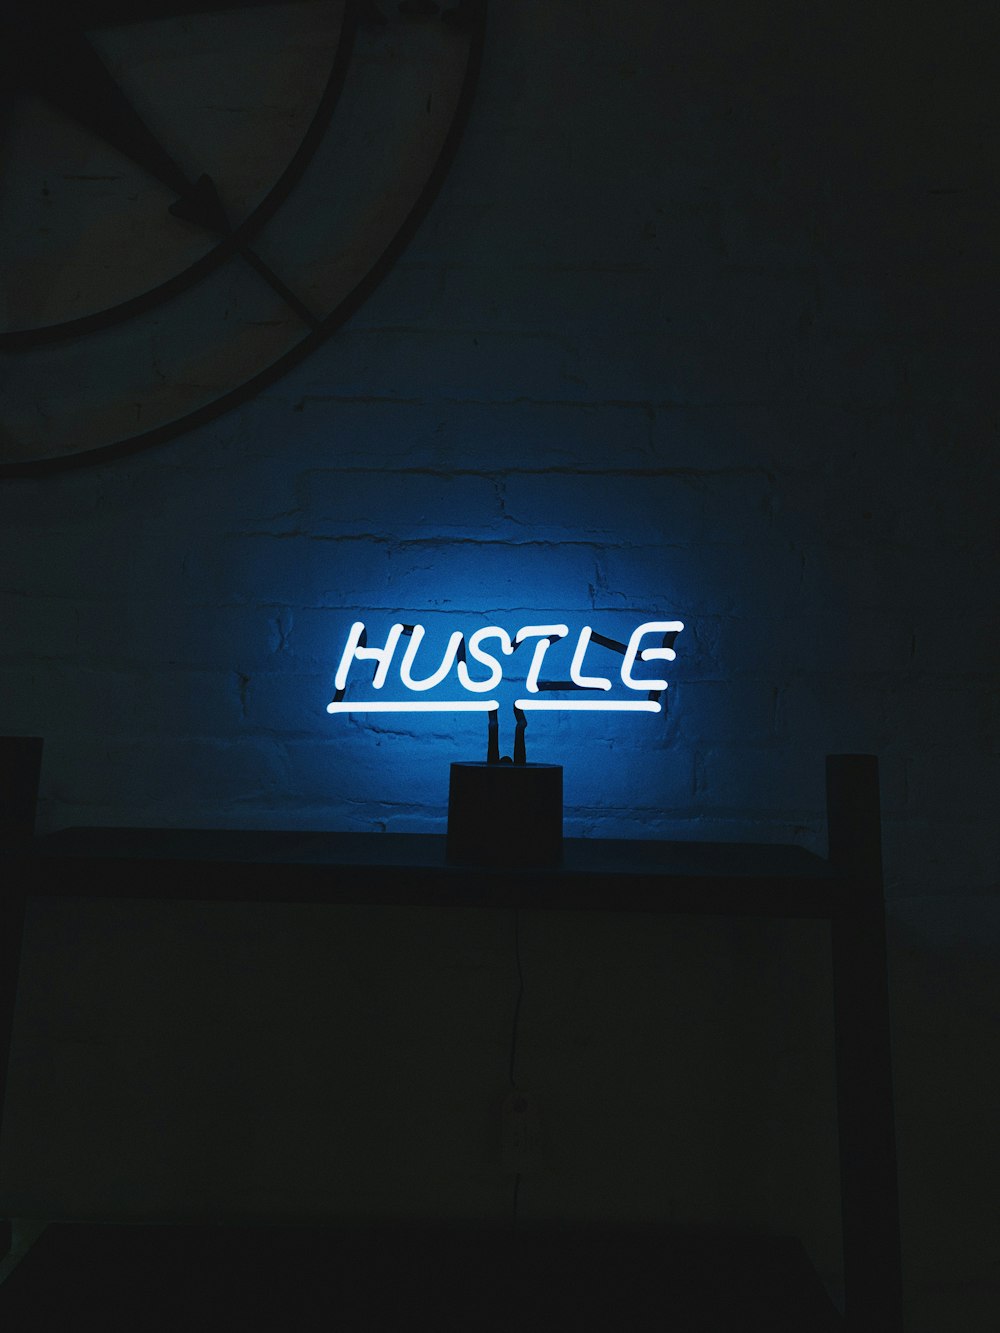 500+ Hustle Pictures [HD] | Download Free Images on Unsplash